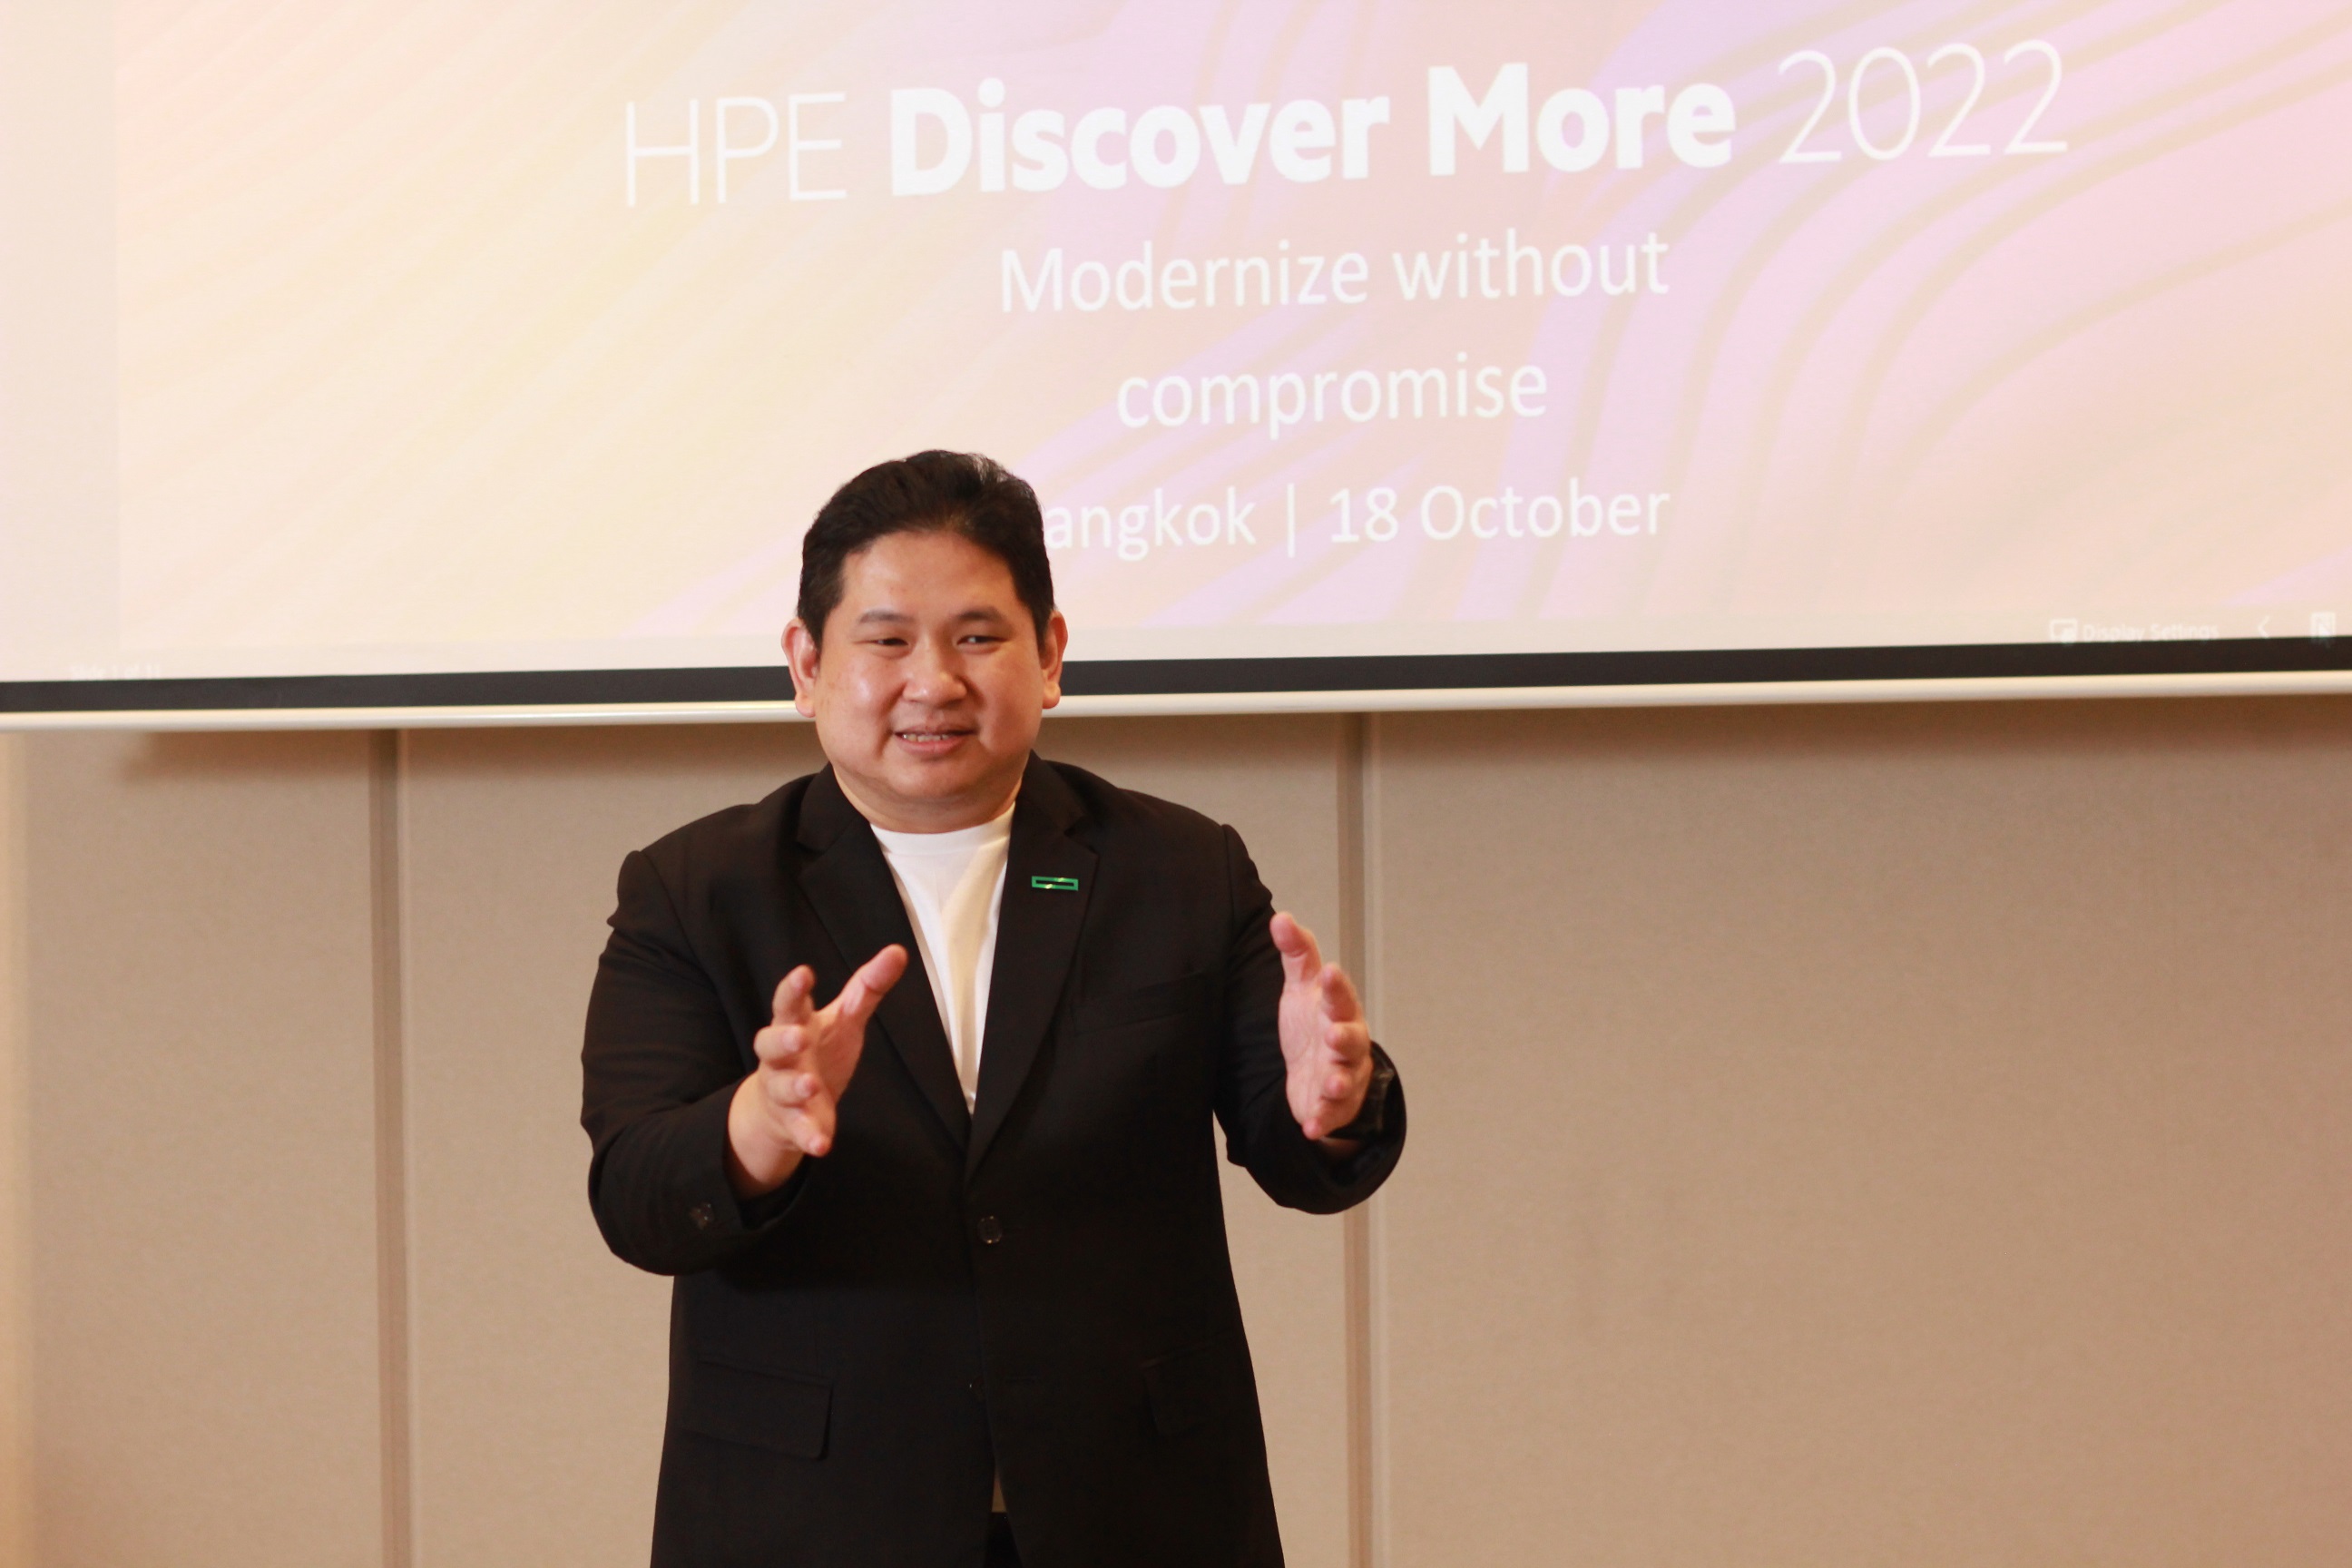 HPE Discover More 2022 เปิดประสบการณ์ไฮบริดคลาวด์ระดับโลก เติมเต็มทุกเทคโนโลยี ตอบโจทย์ Sustainability ในทุกความต้องการขององค์กร